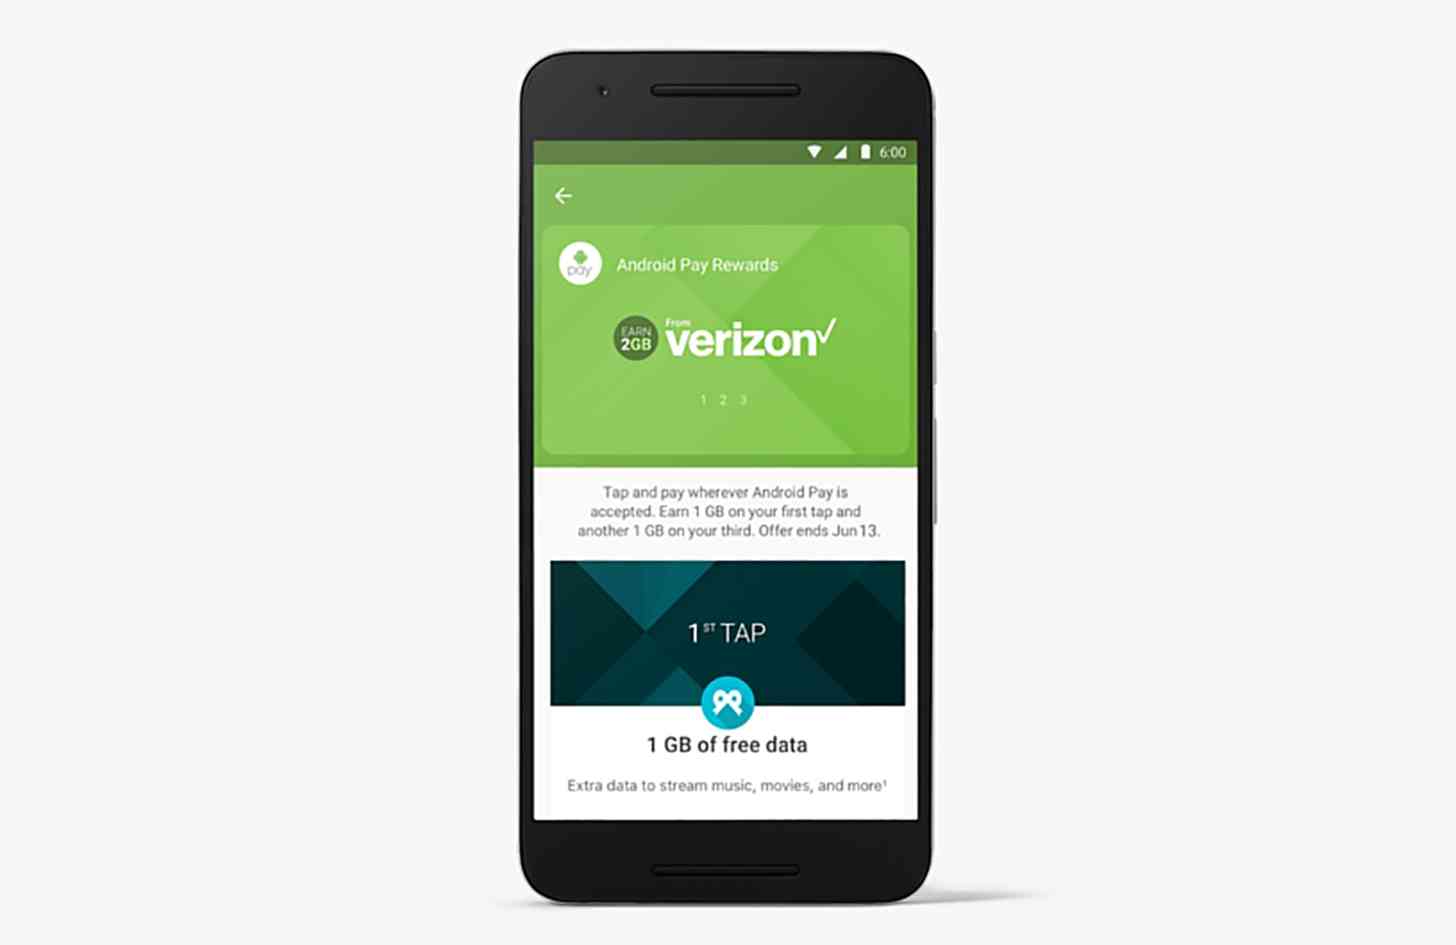 Verizon Android Pay promo